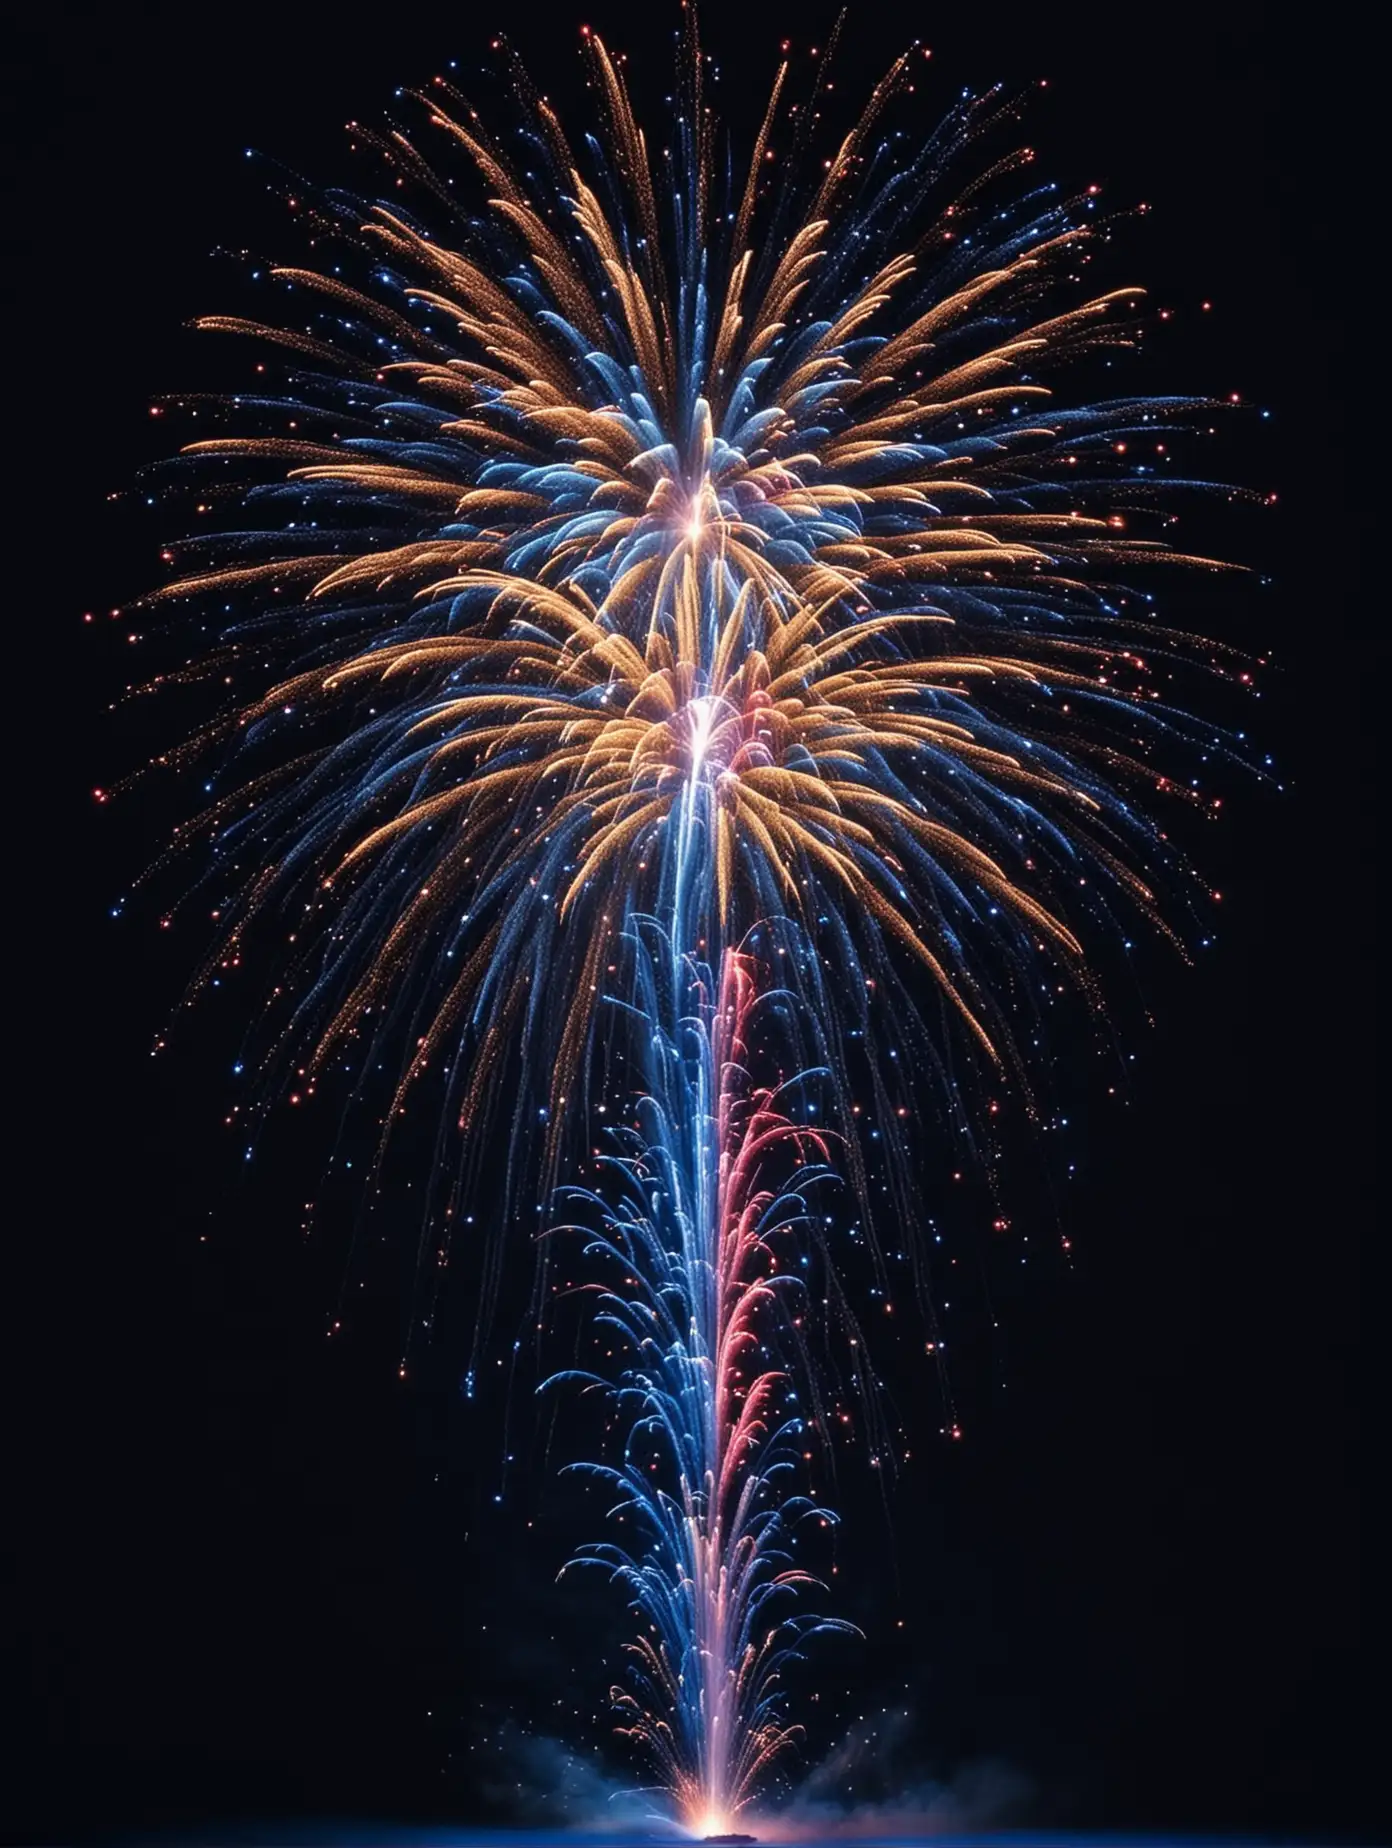 Vibrant Multicolored Fireworks Display Against Night Sky